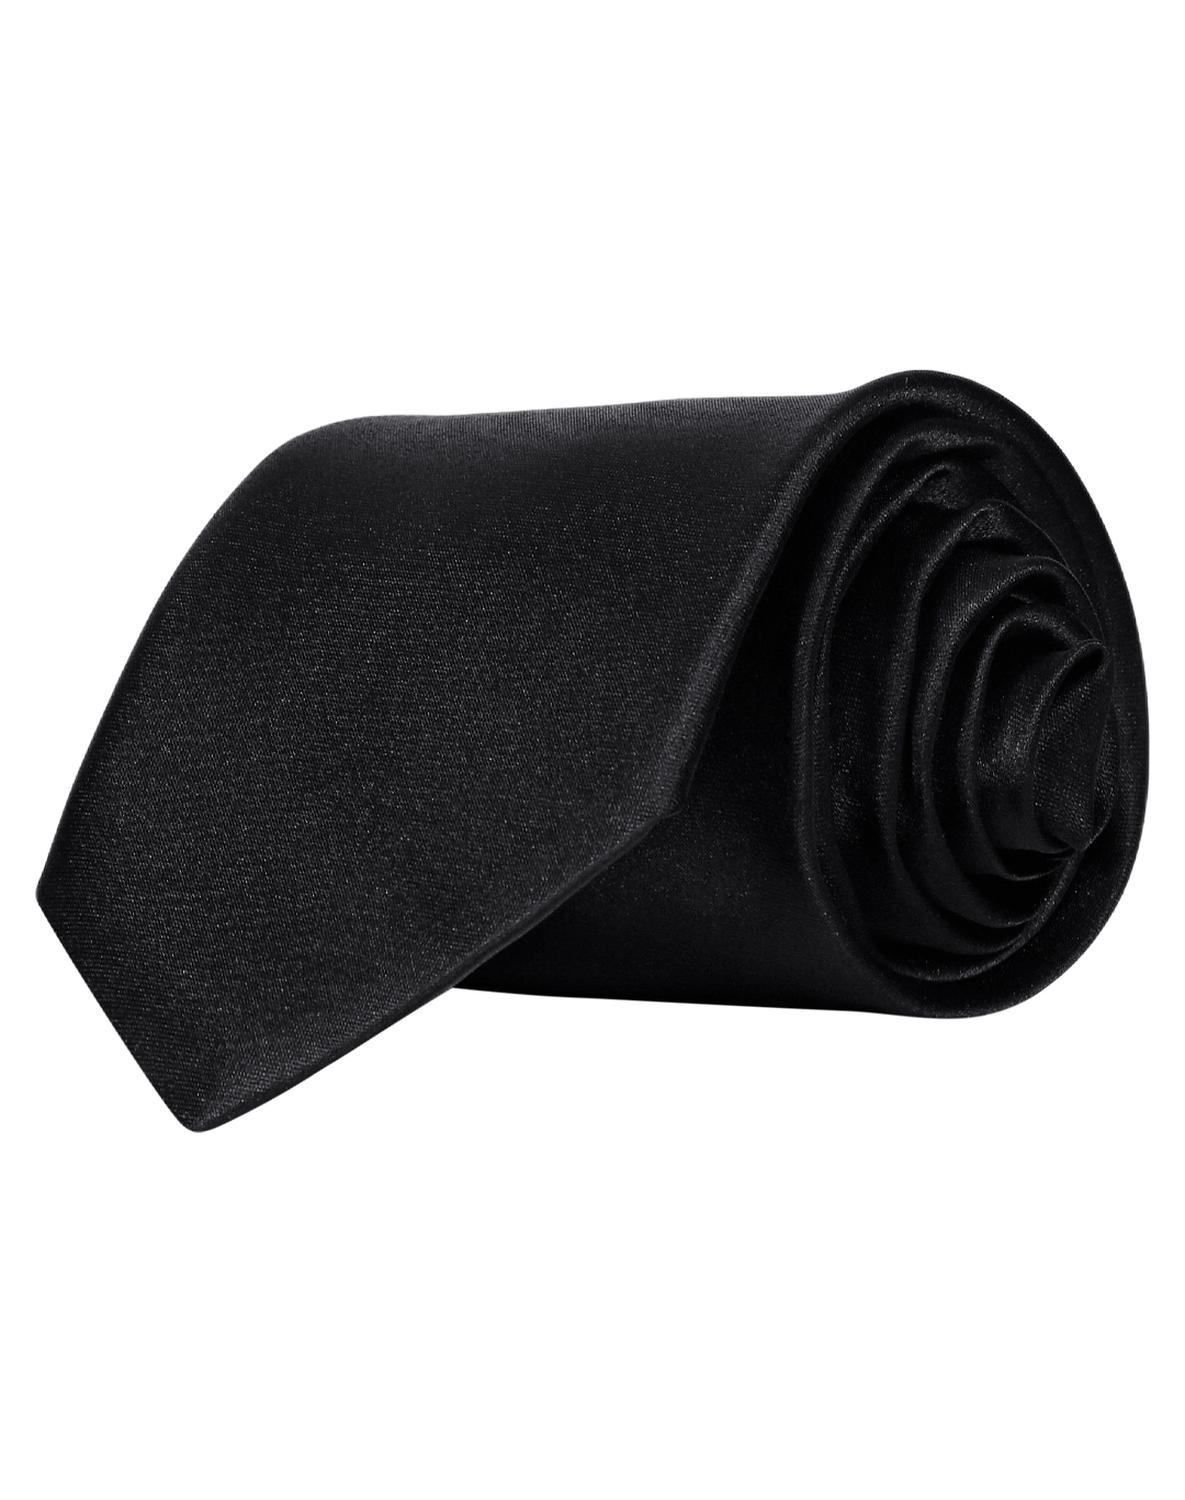 Corbata Regular Hombre Negro Stfashion 52704208